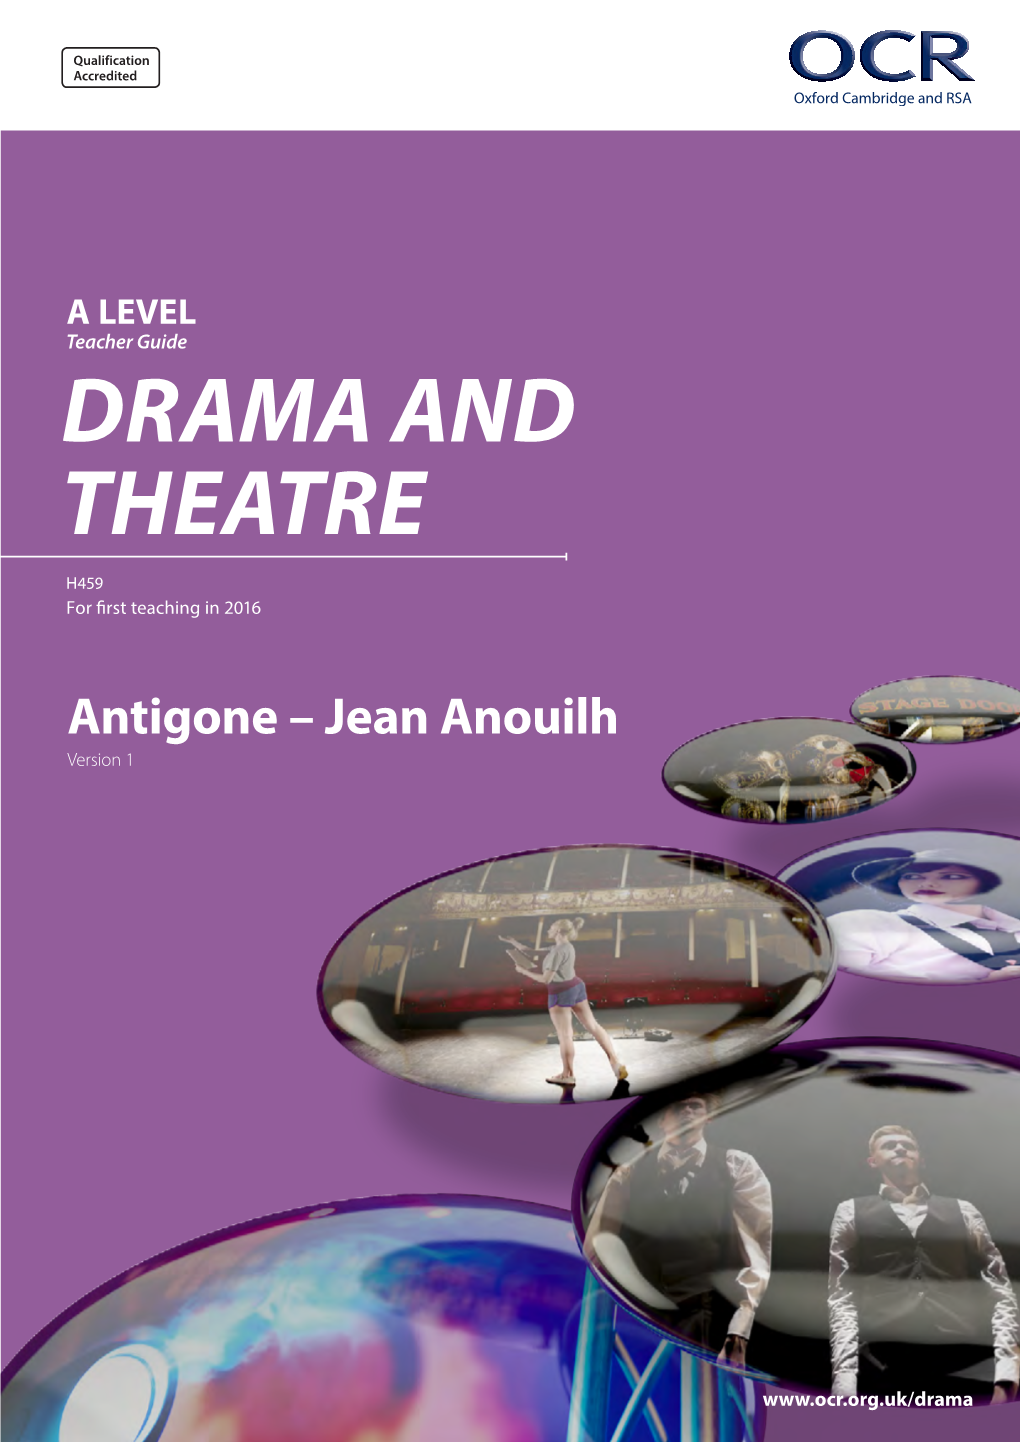 A Level Drama and Theatre Teacher Guide